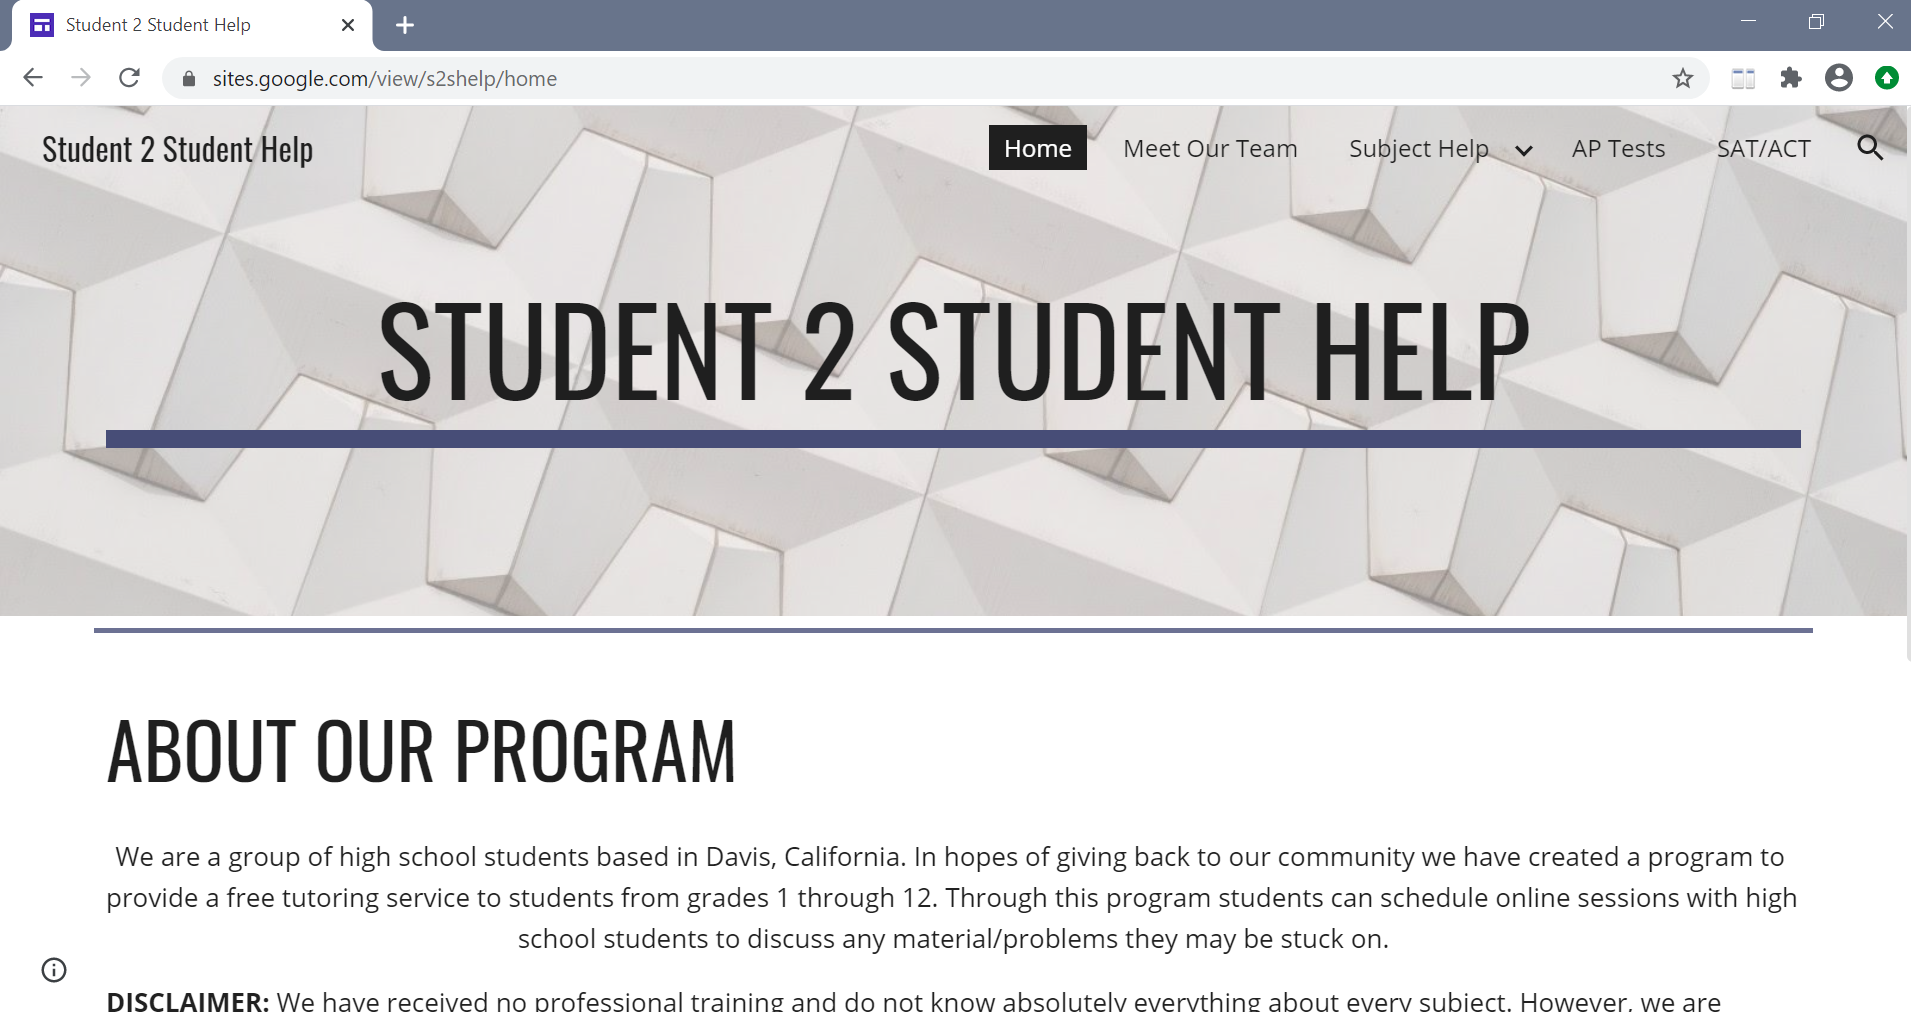 Student 2 Student Help website homepage